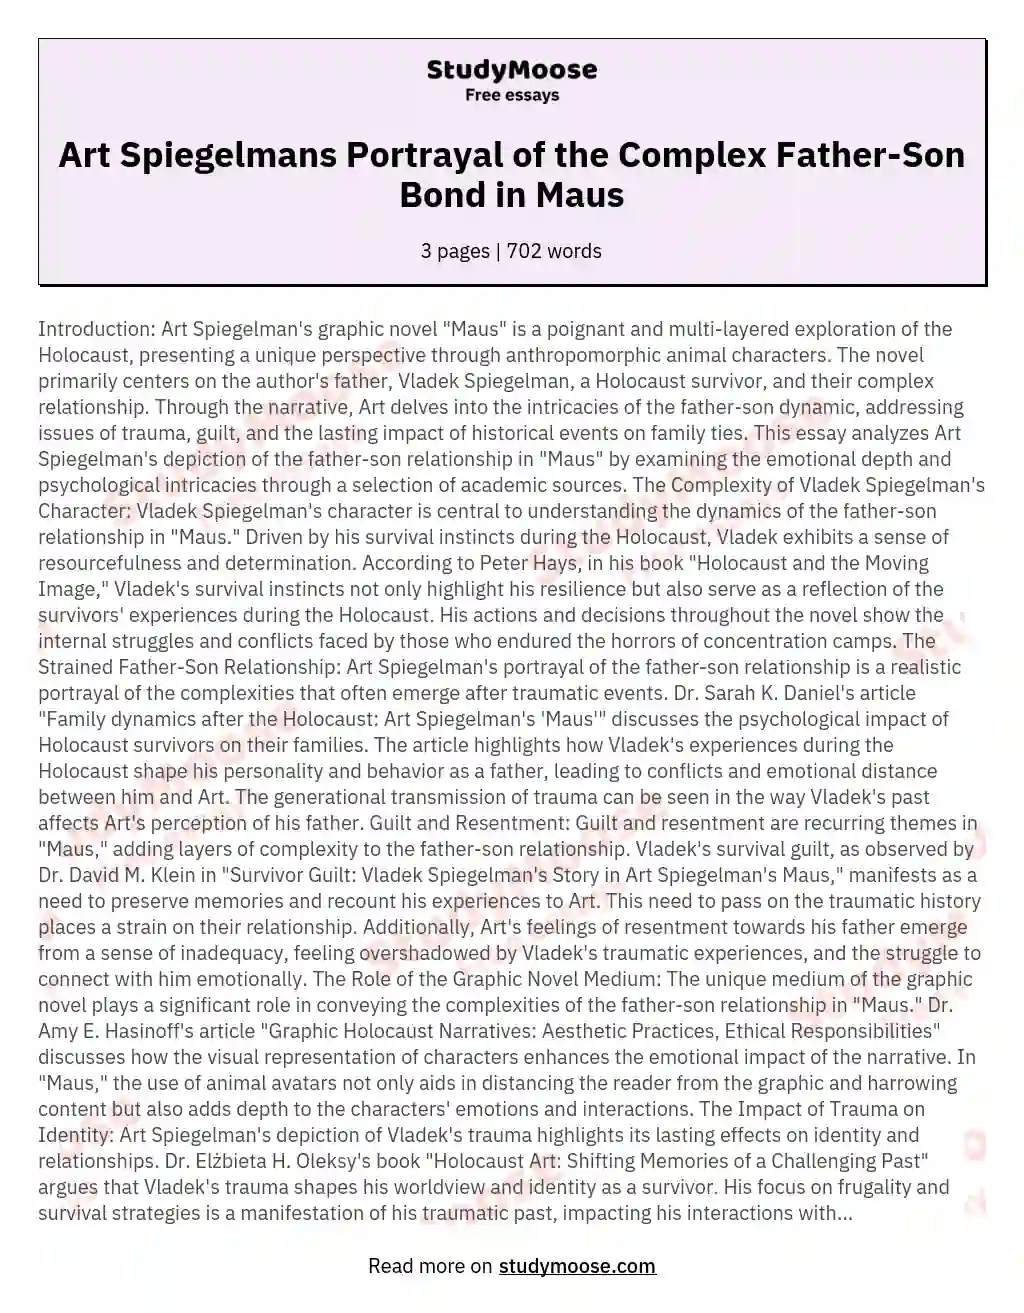 Art Spiegelmans Portrayal of the Complex Father-Son Bond in Maus essay